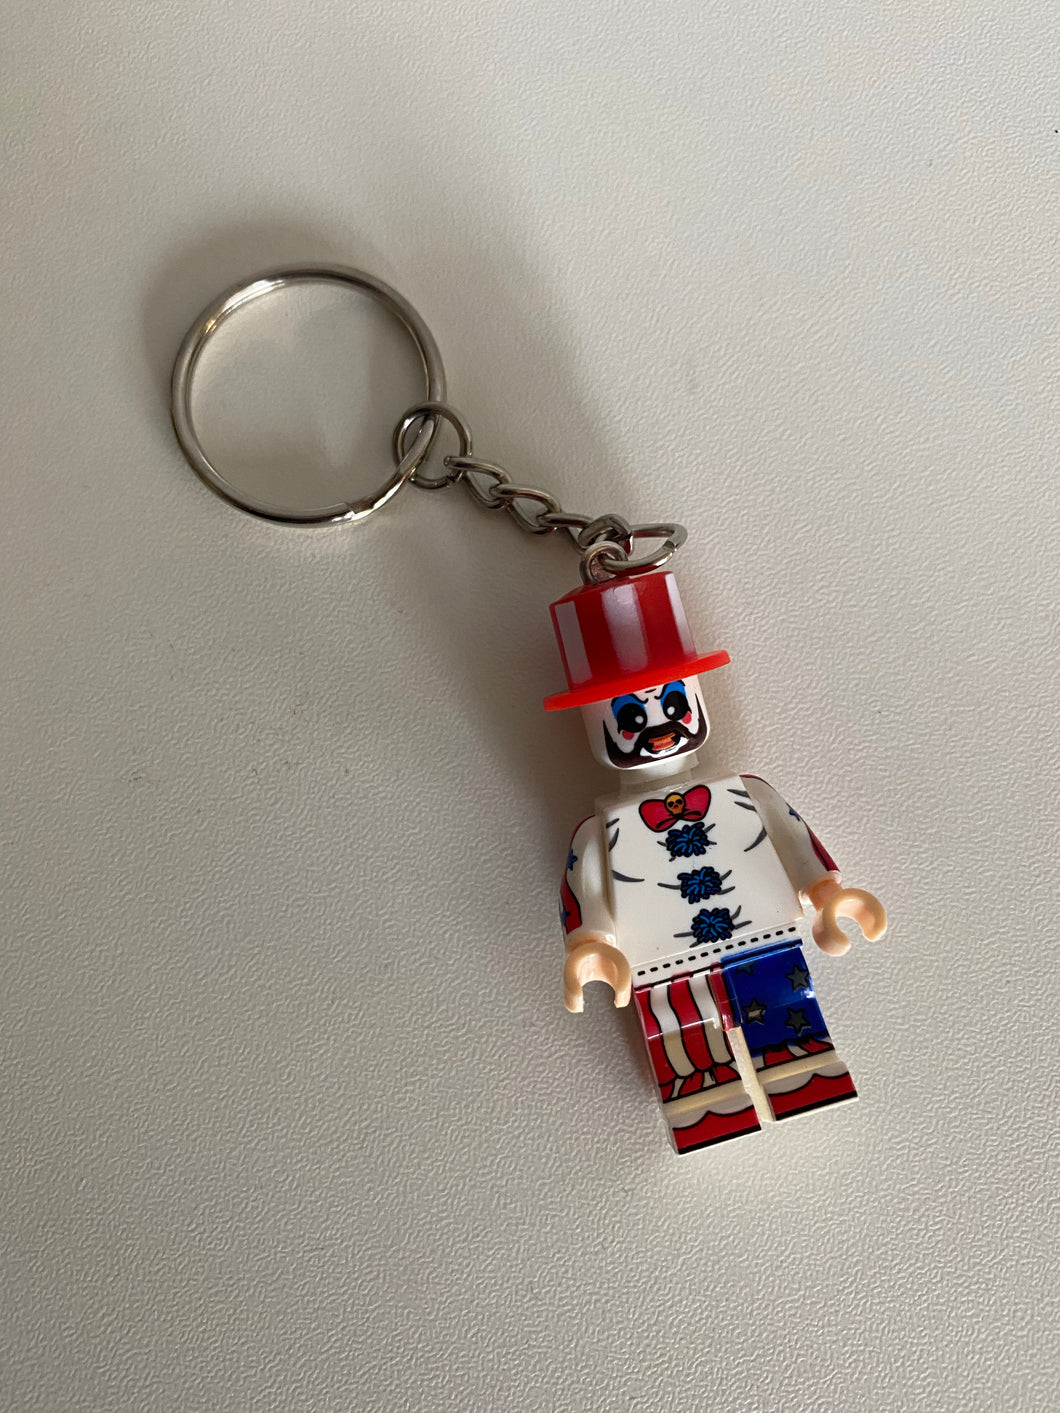 Captain Spaulding Lego Keychains